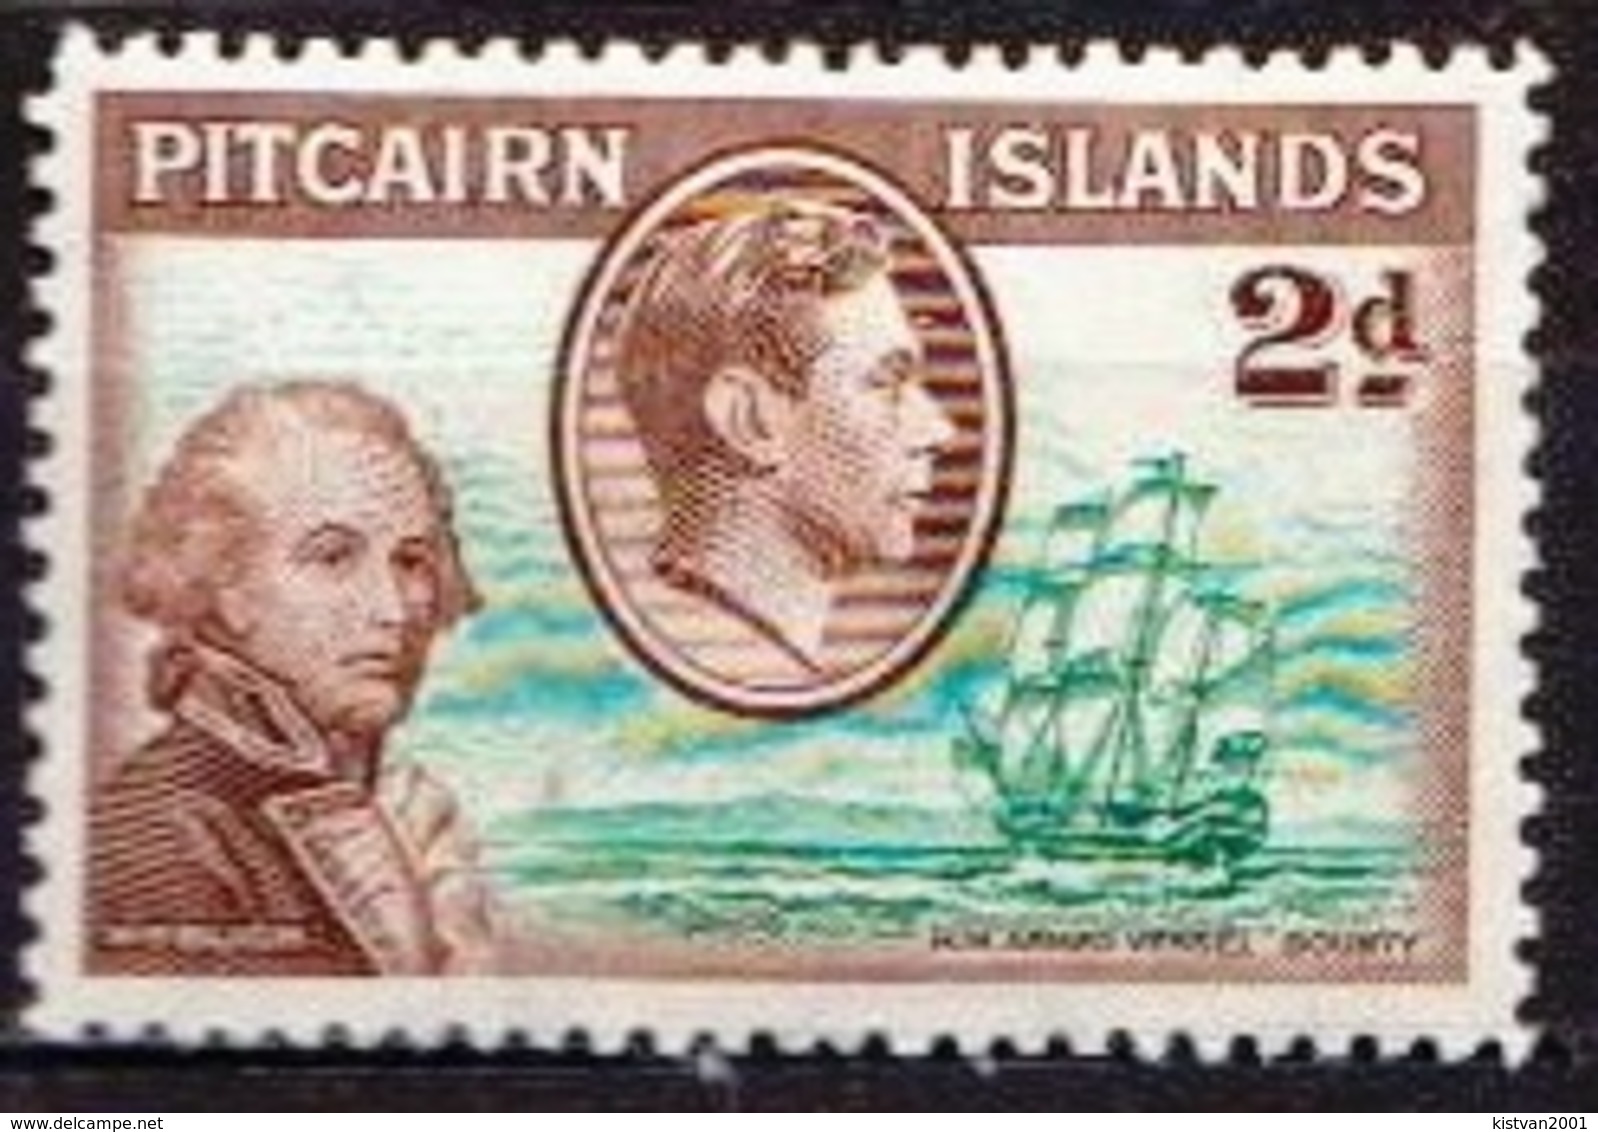 Pitcairn MH Stamp - Pitcairn Islands